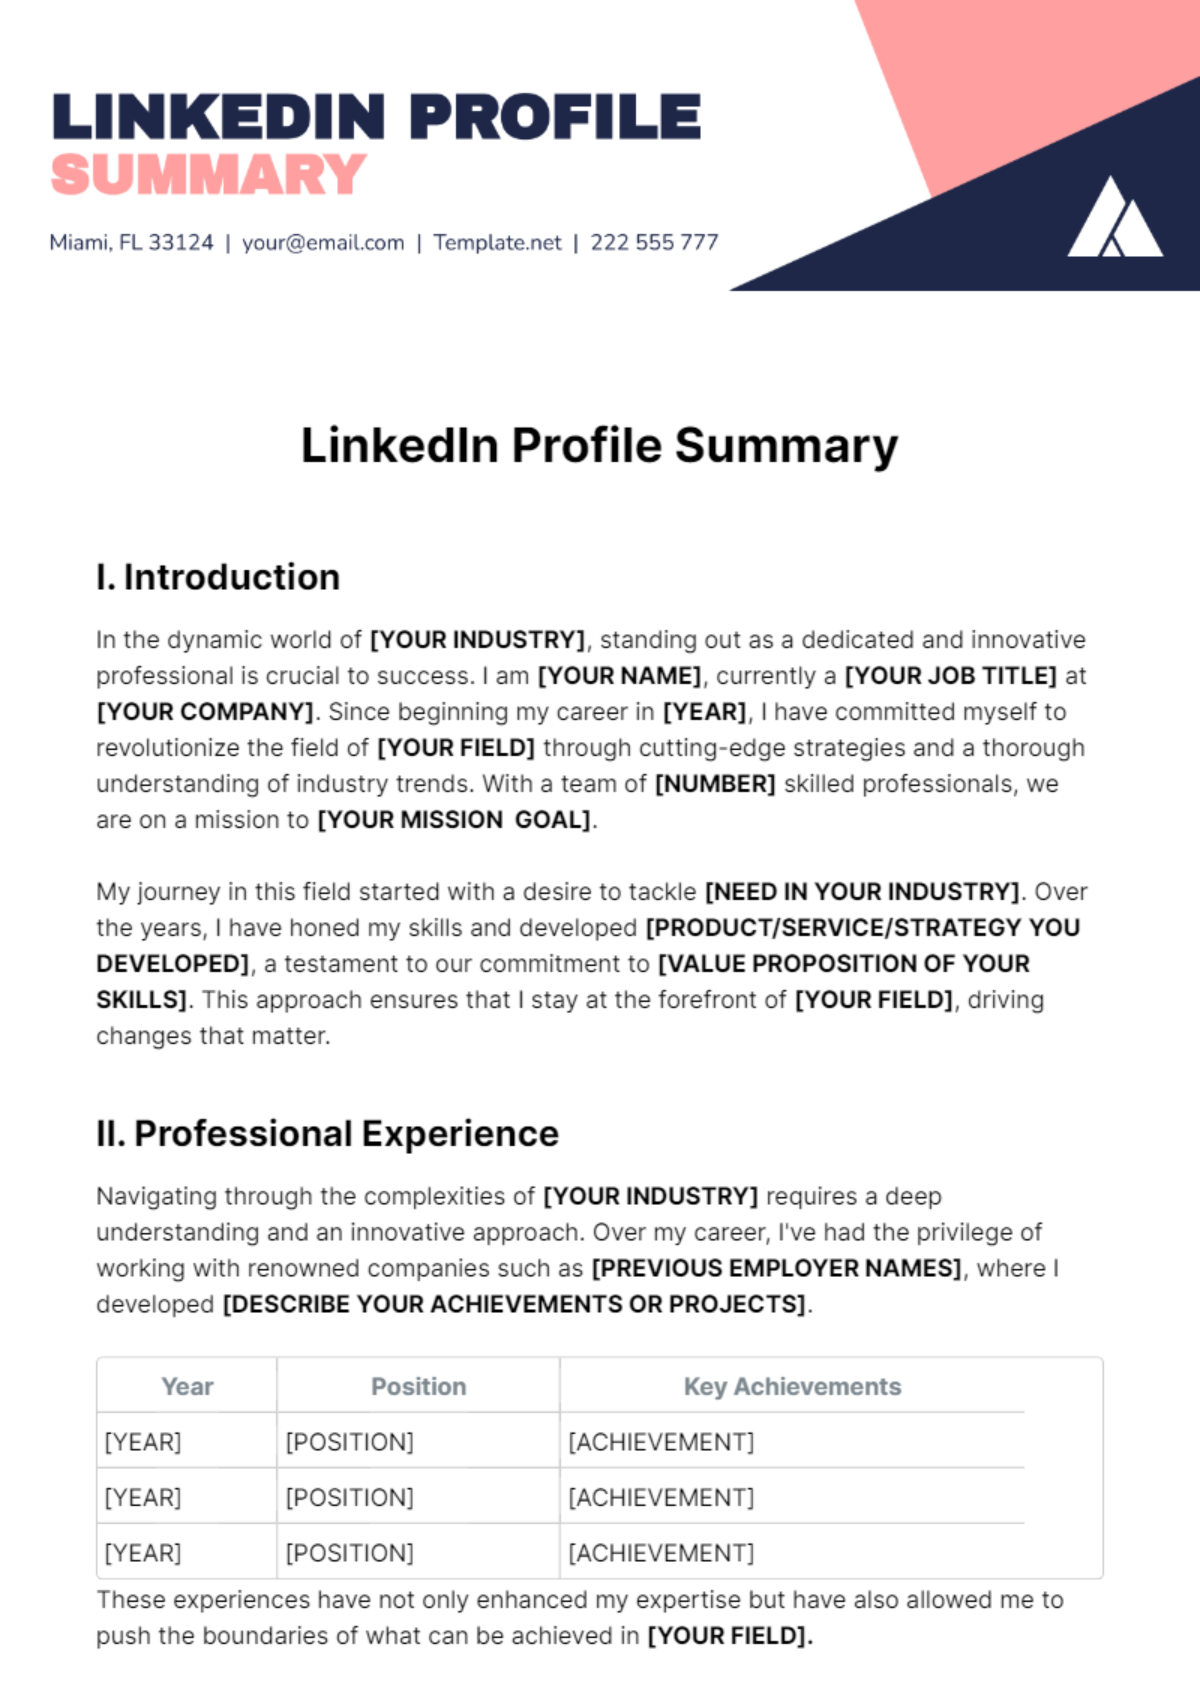 Free LinkedIn Profile Summary Template